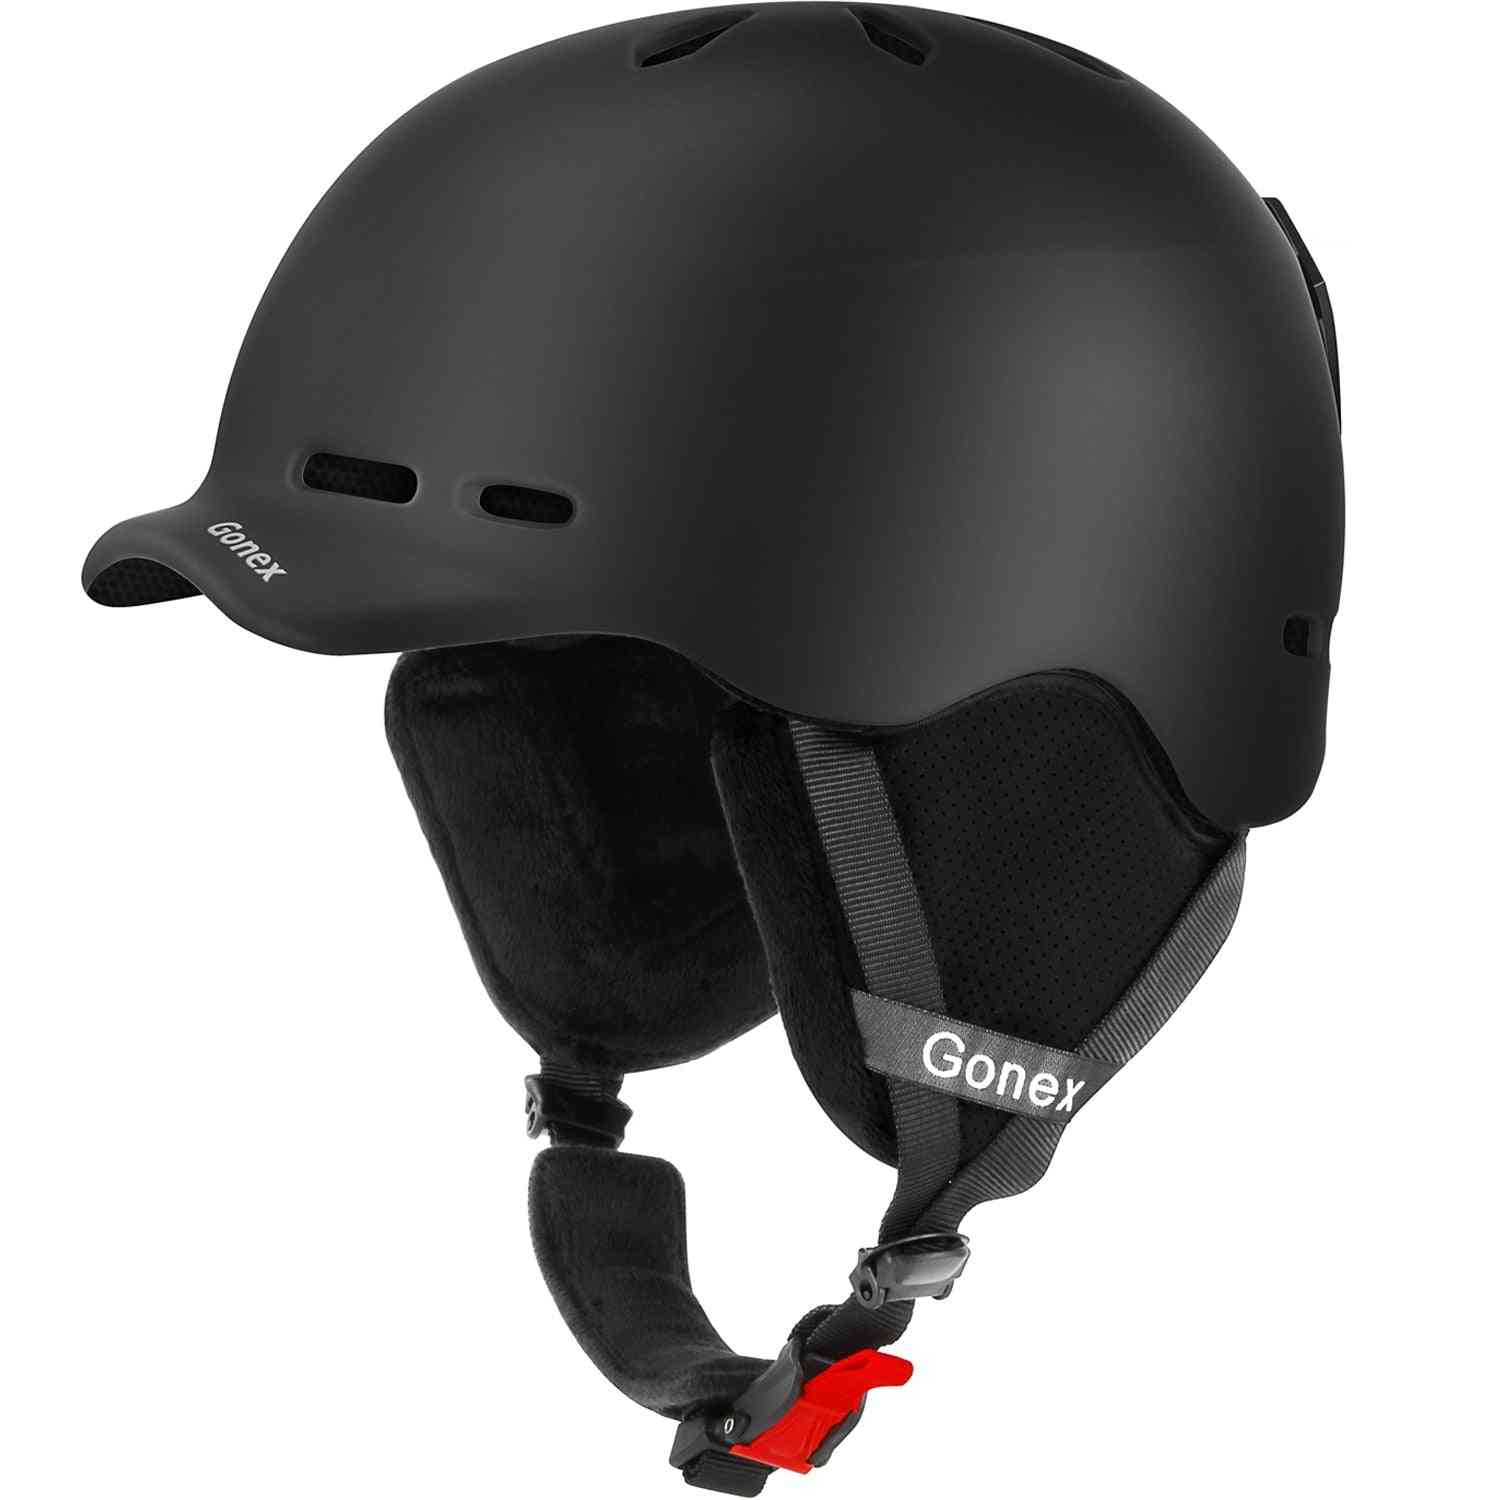 Capacete de esqui para jovens com capacete de segurança para snowboard moldado integralmente